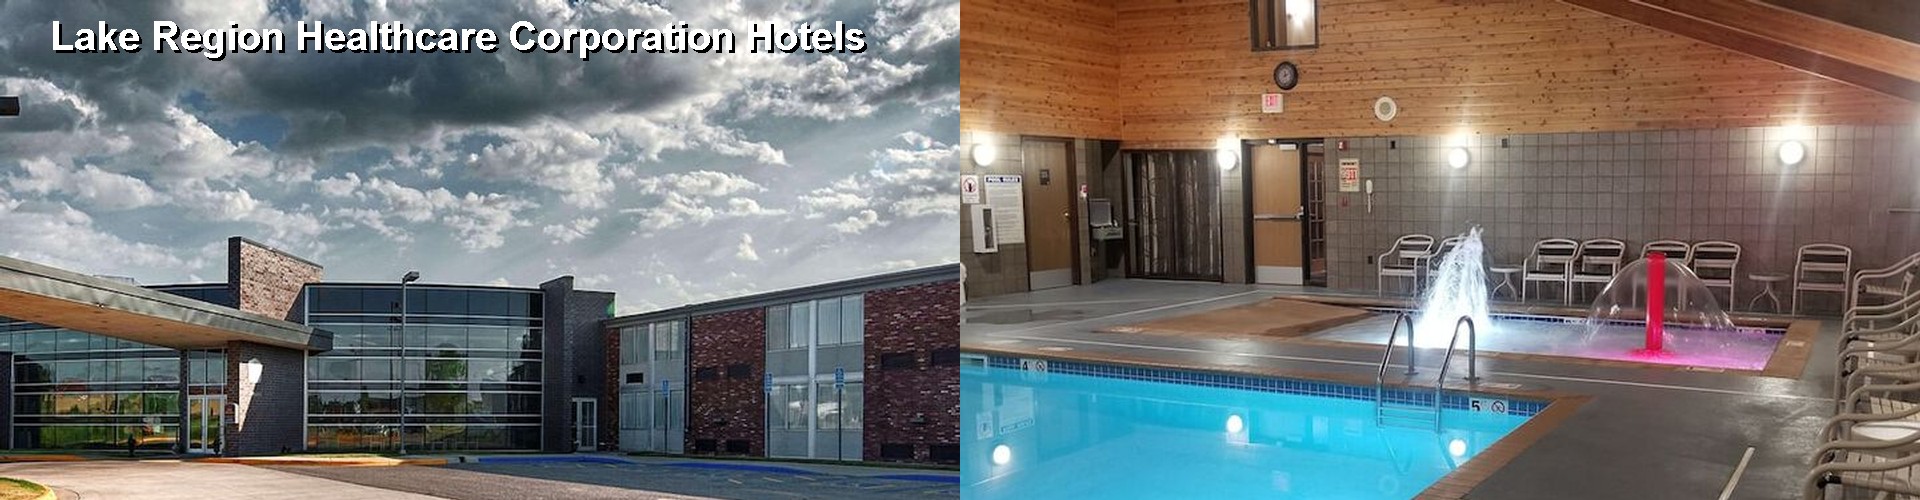 3 Best Hotels near Lake Region Healthcare Corporation